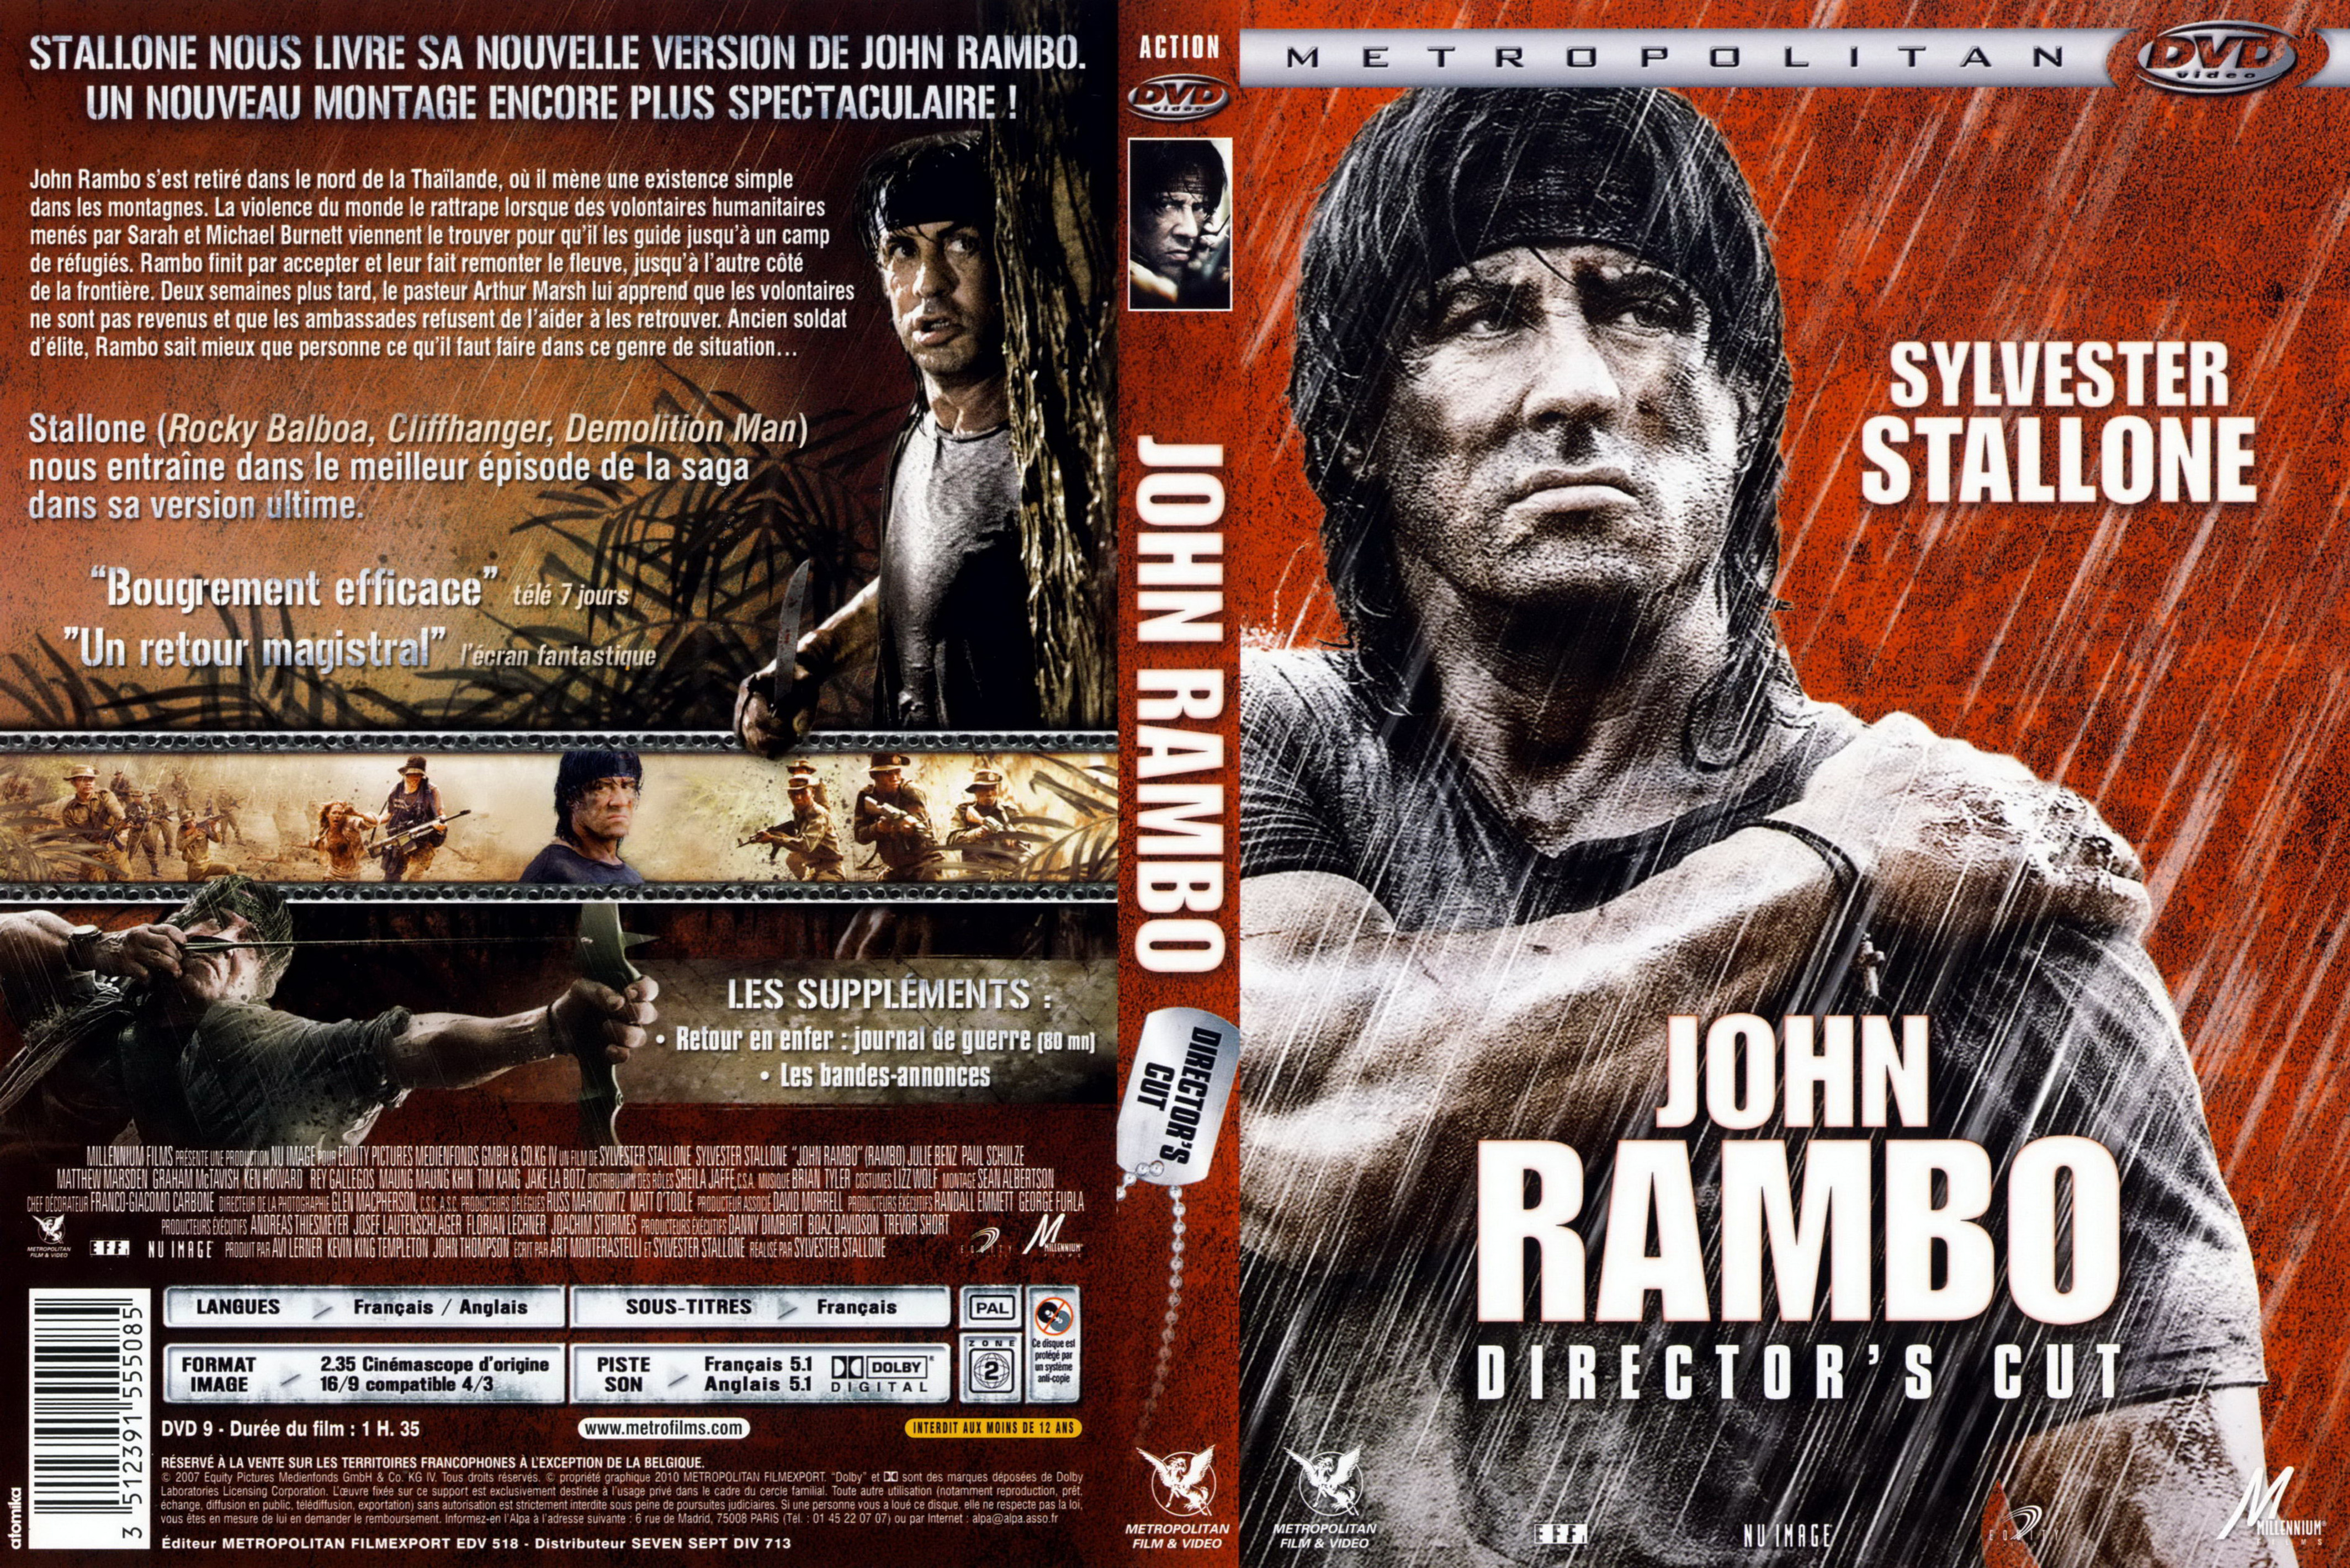 Jaquette DVD John Rambo v3